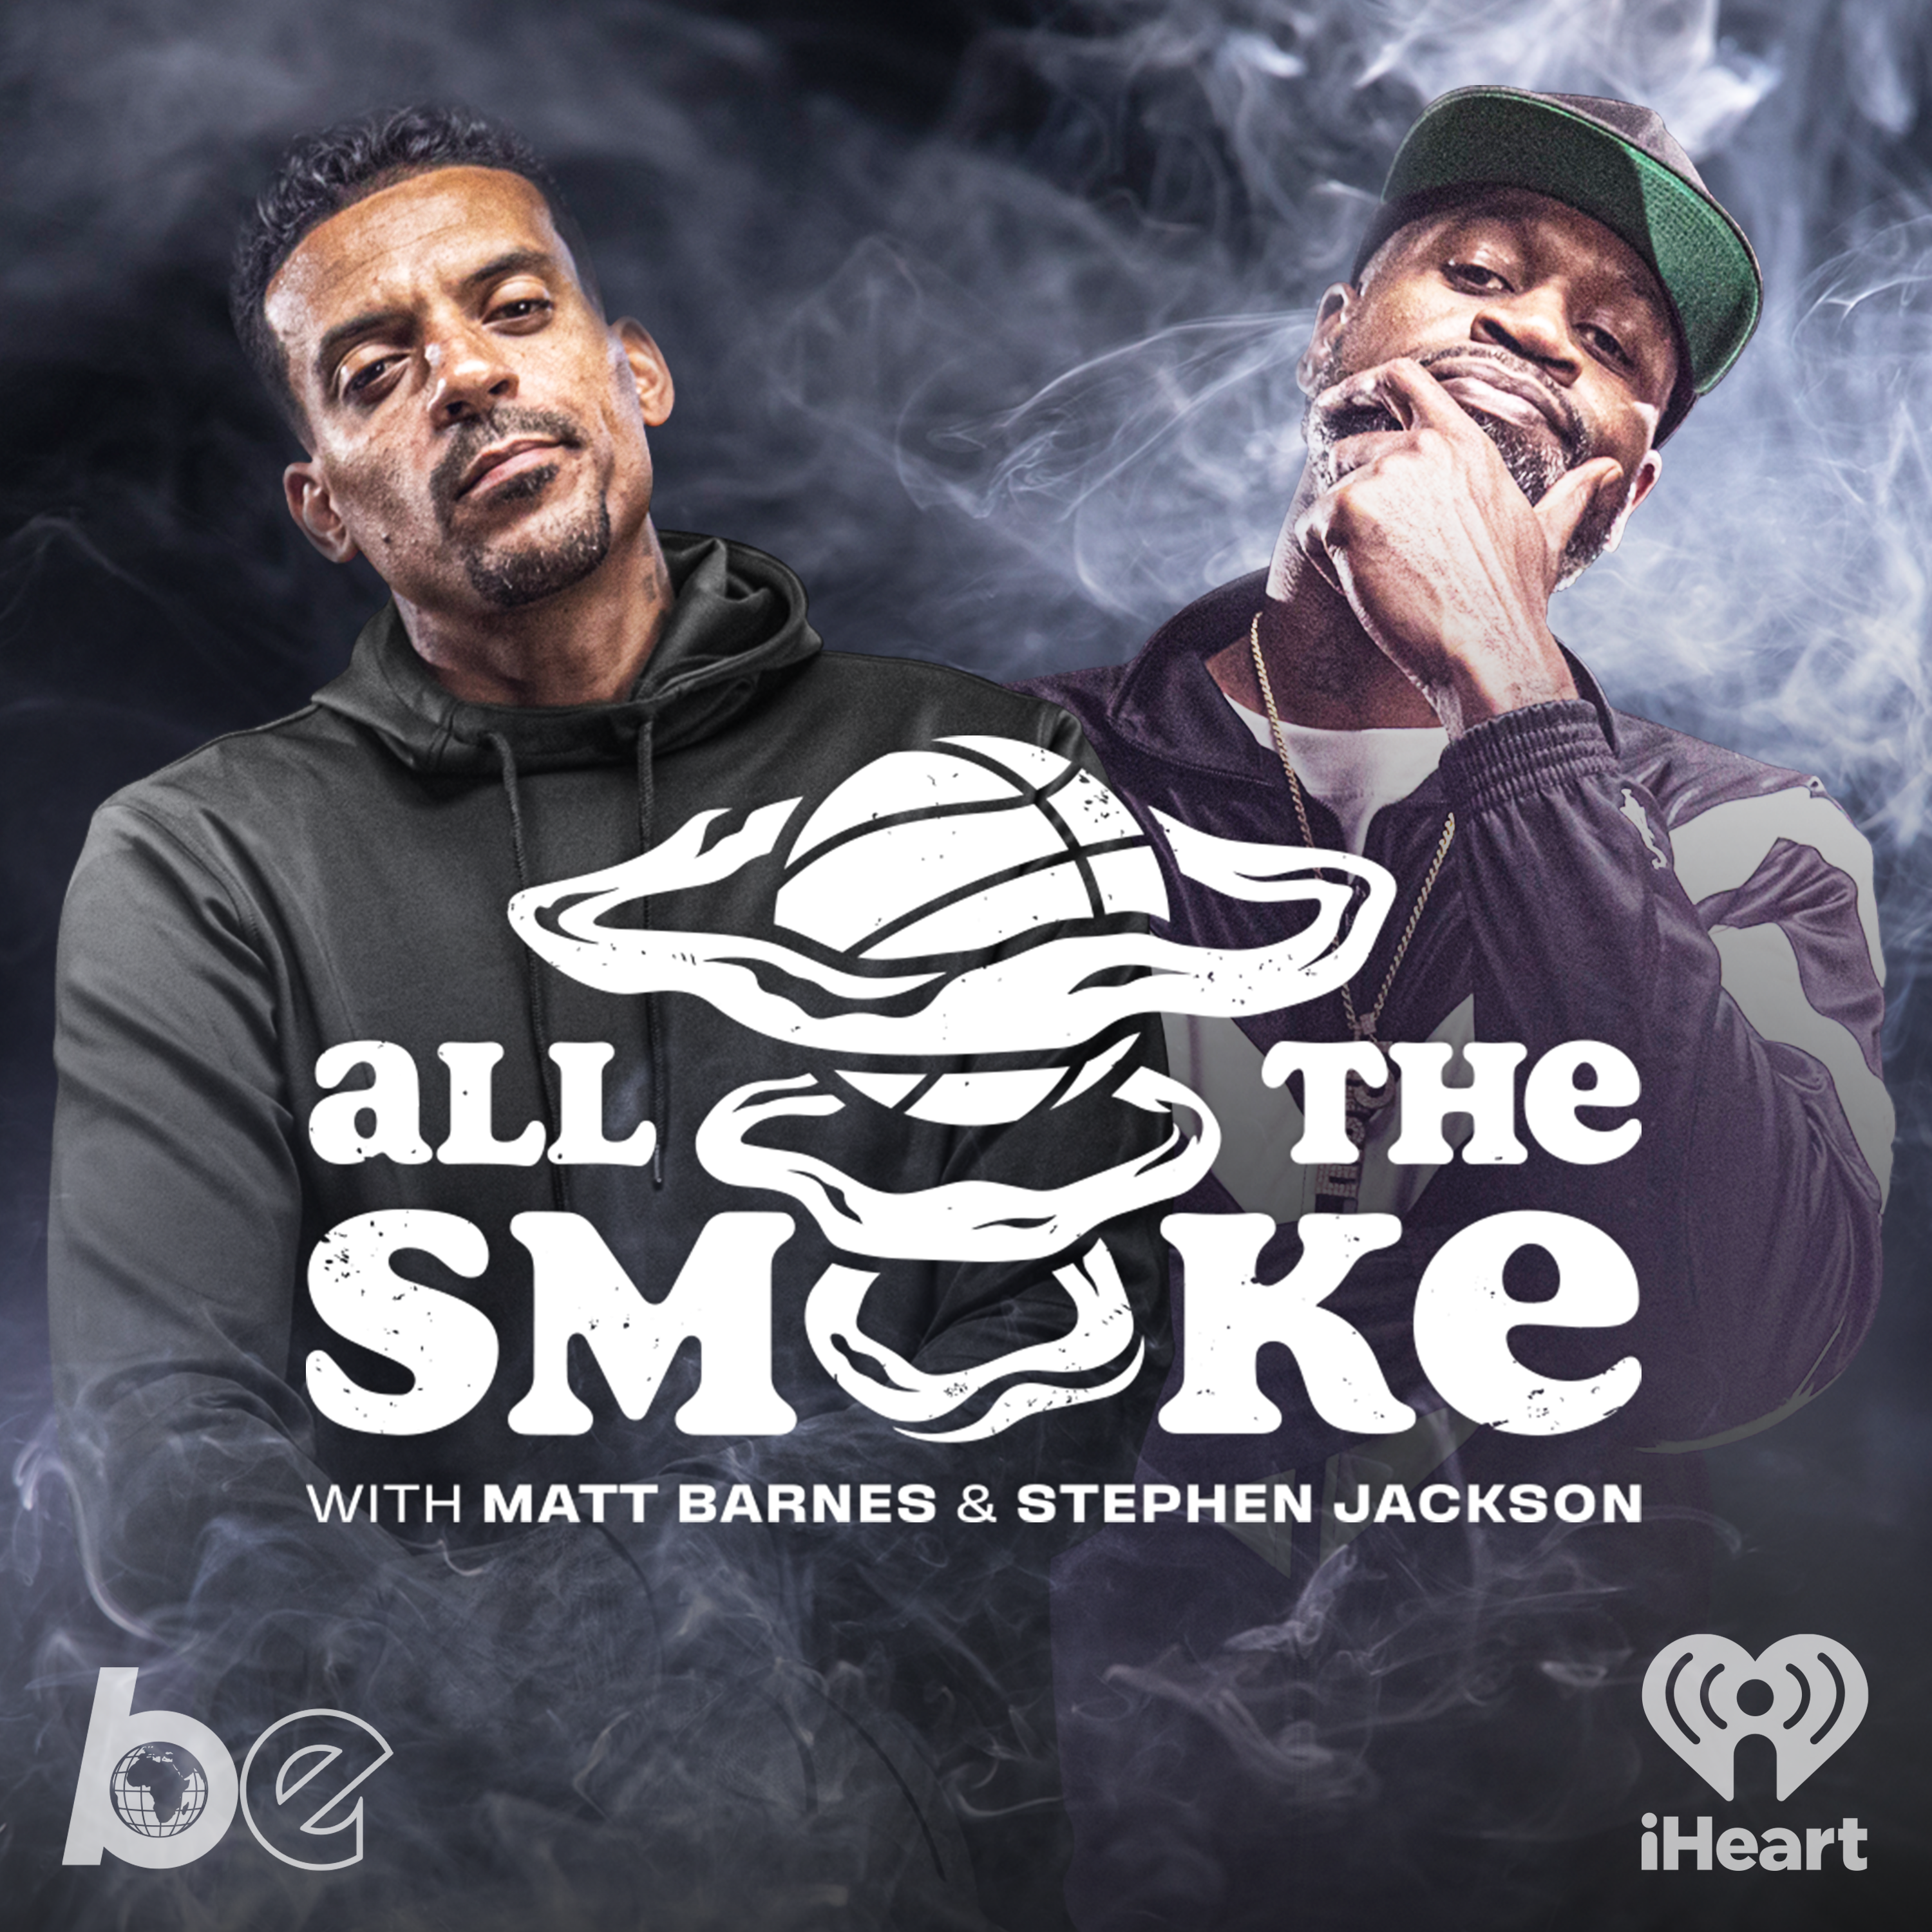 Cam Newton | Ep 104 | ALL THE SMOKE Full Episode | SHOWTIME Basketball